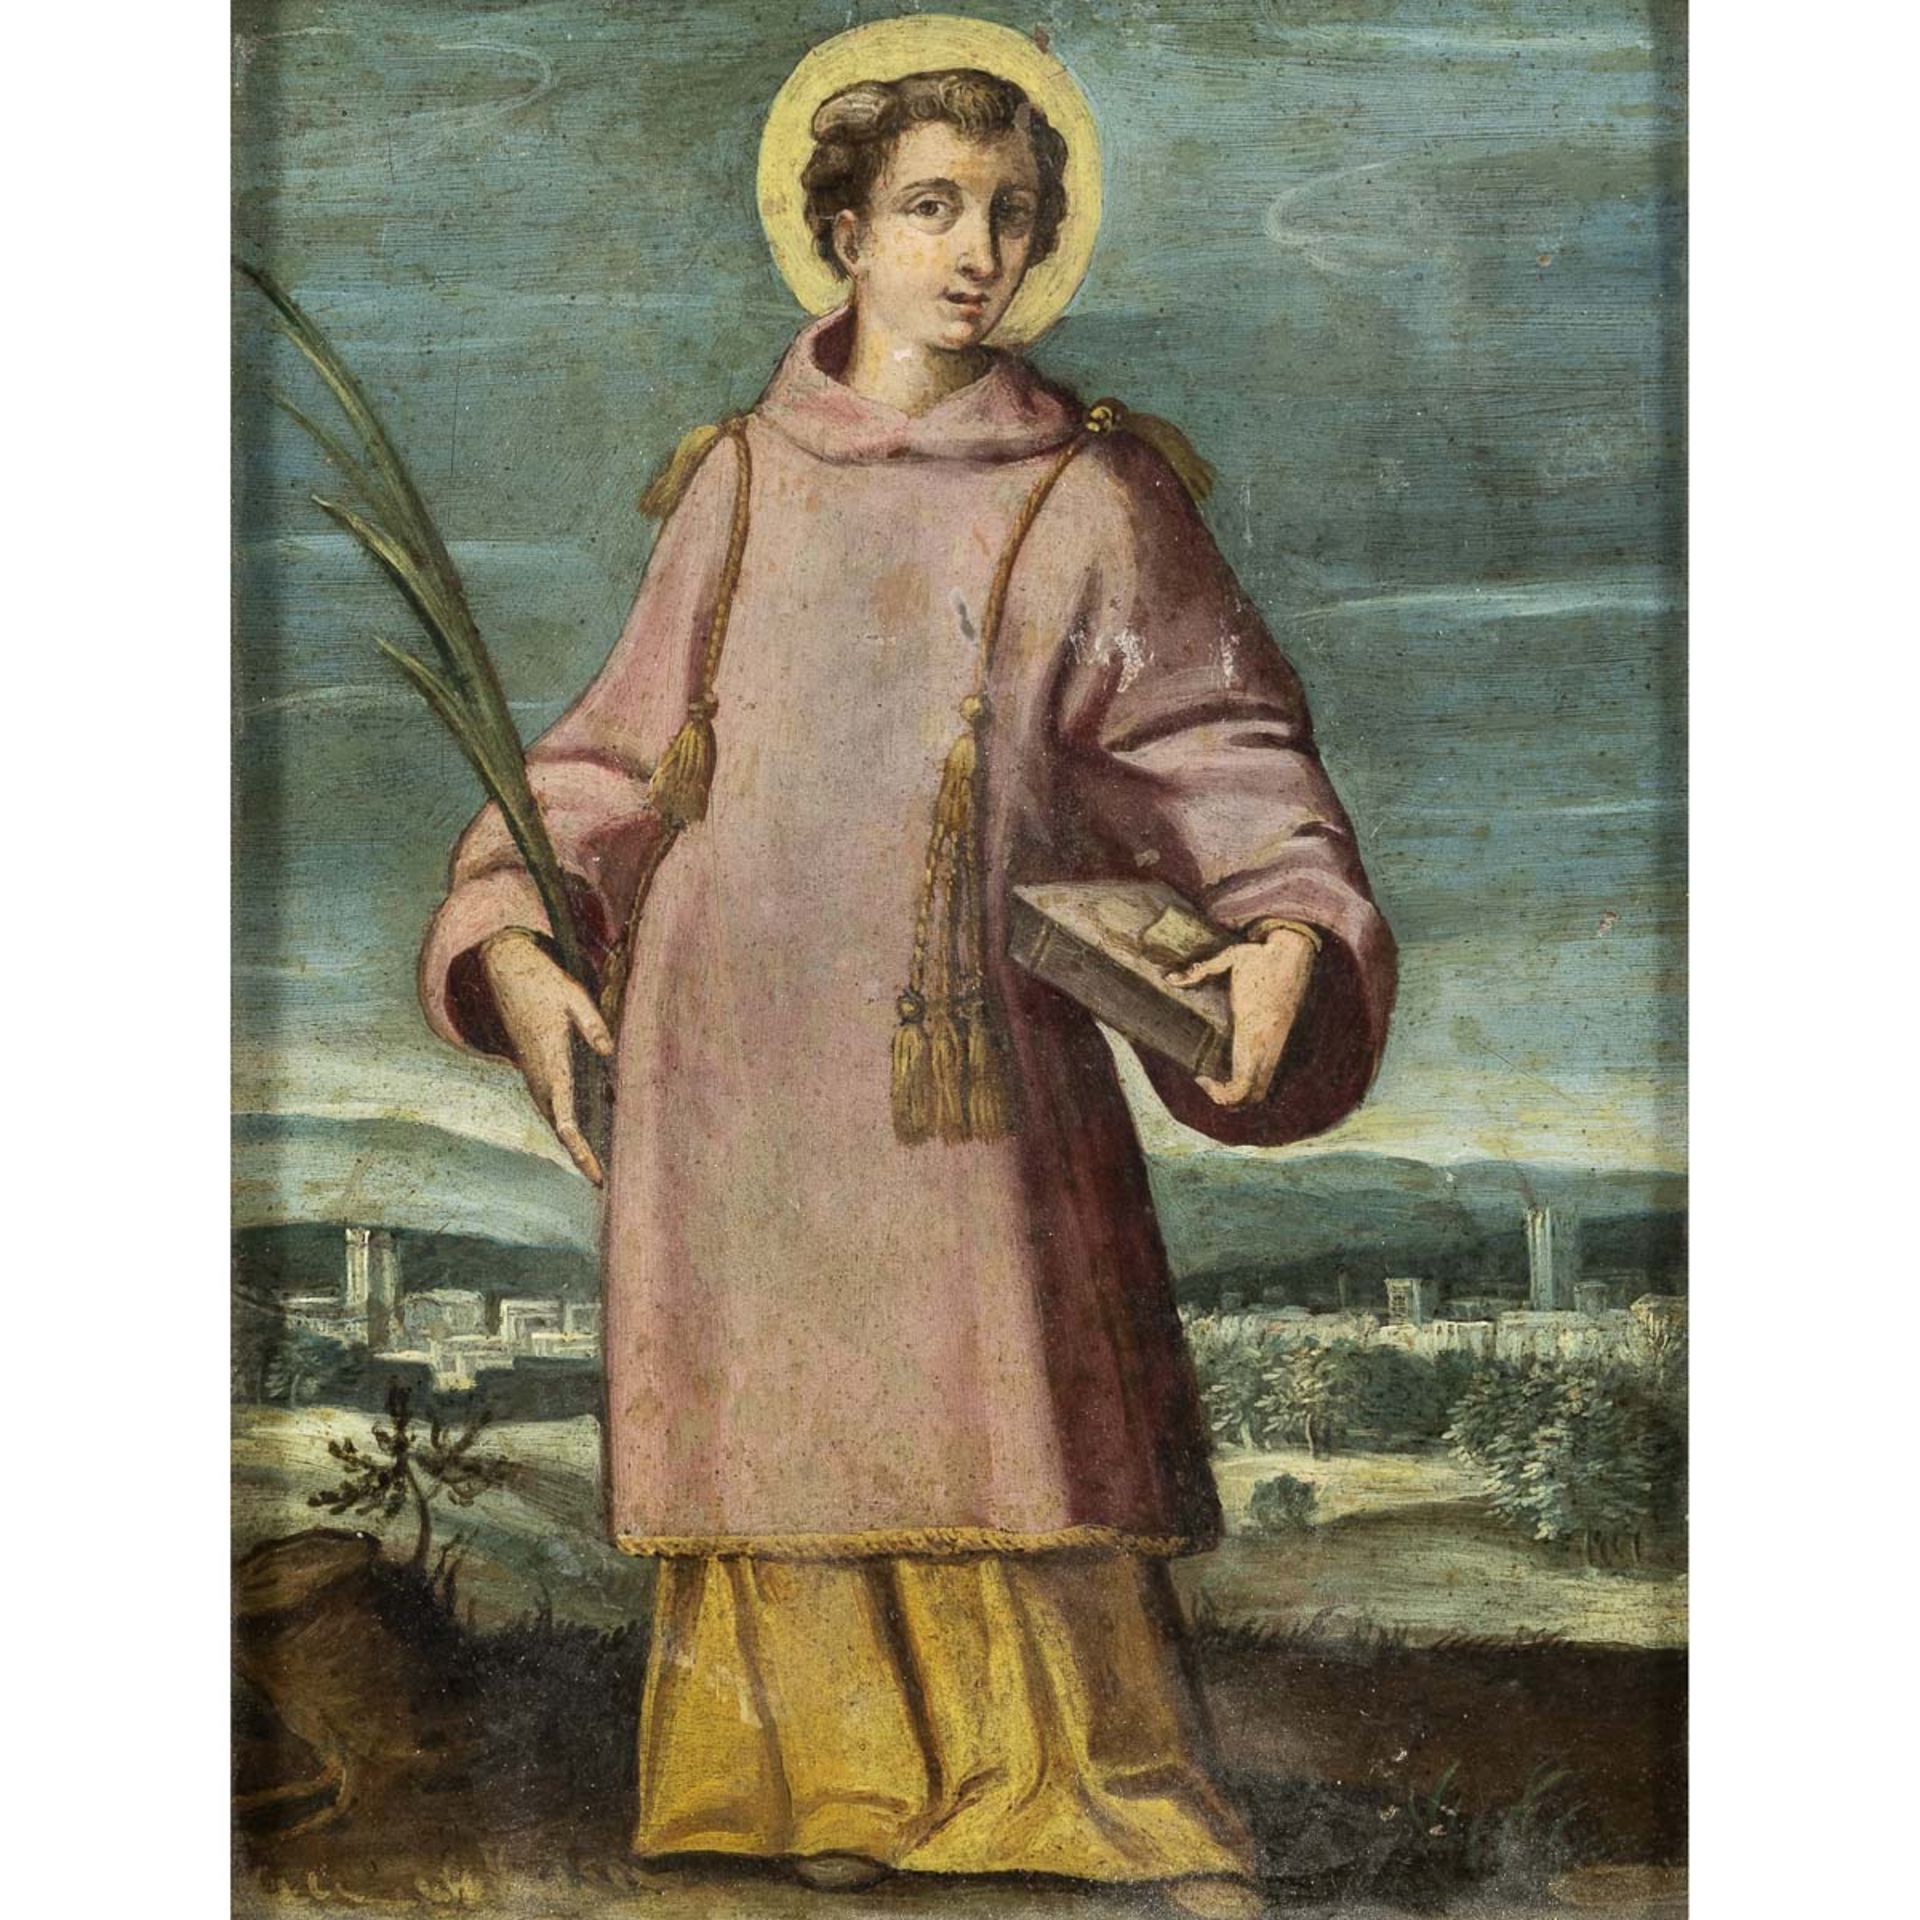 Bolognese painter